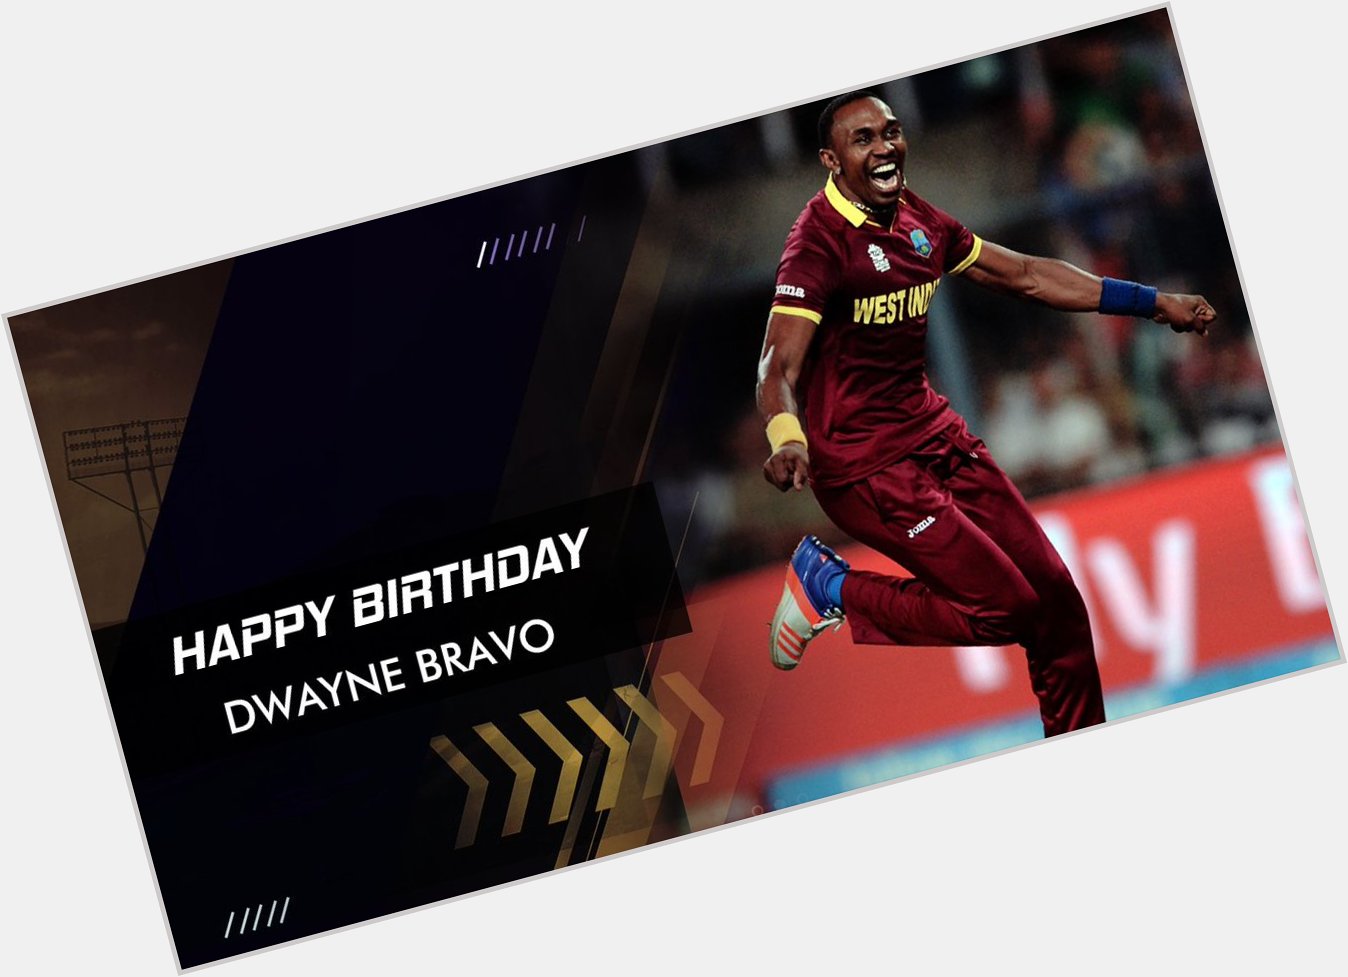 Happy Birthday!! Dwayne Bravo

A genuine all-rounder for West Indies 